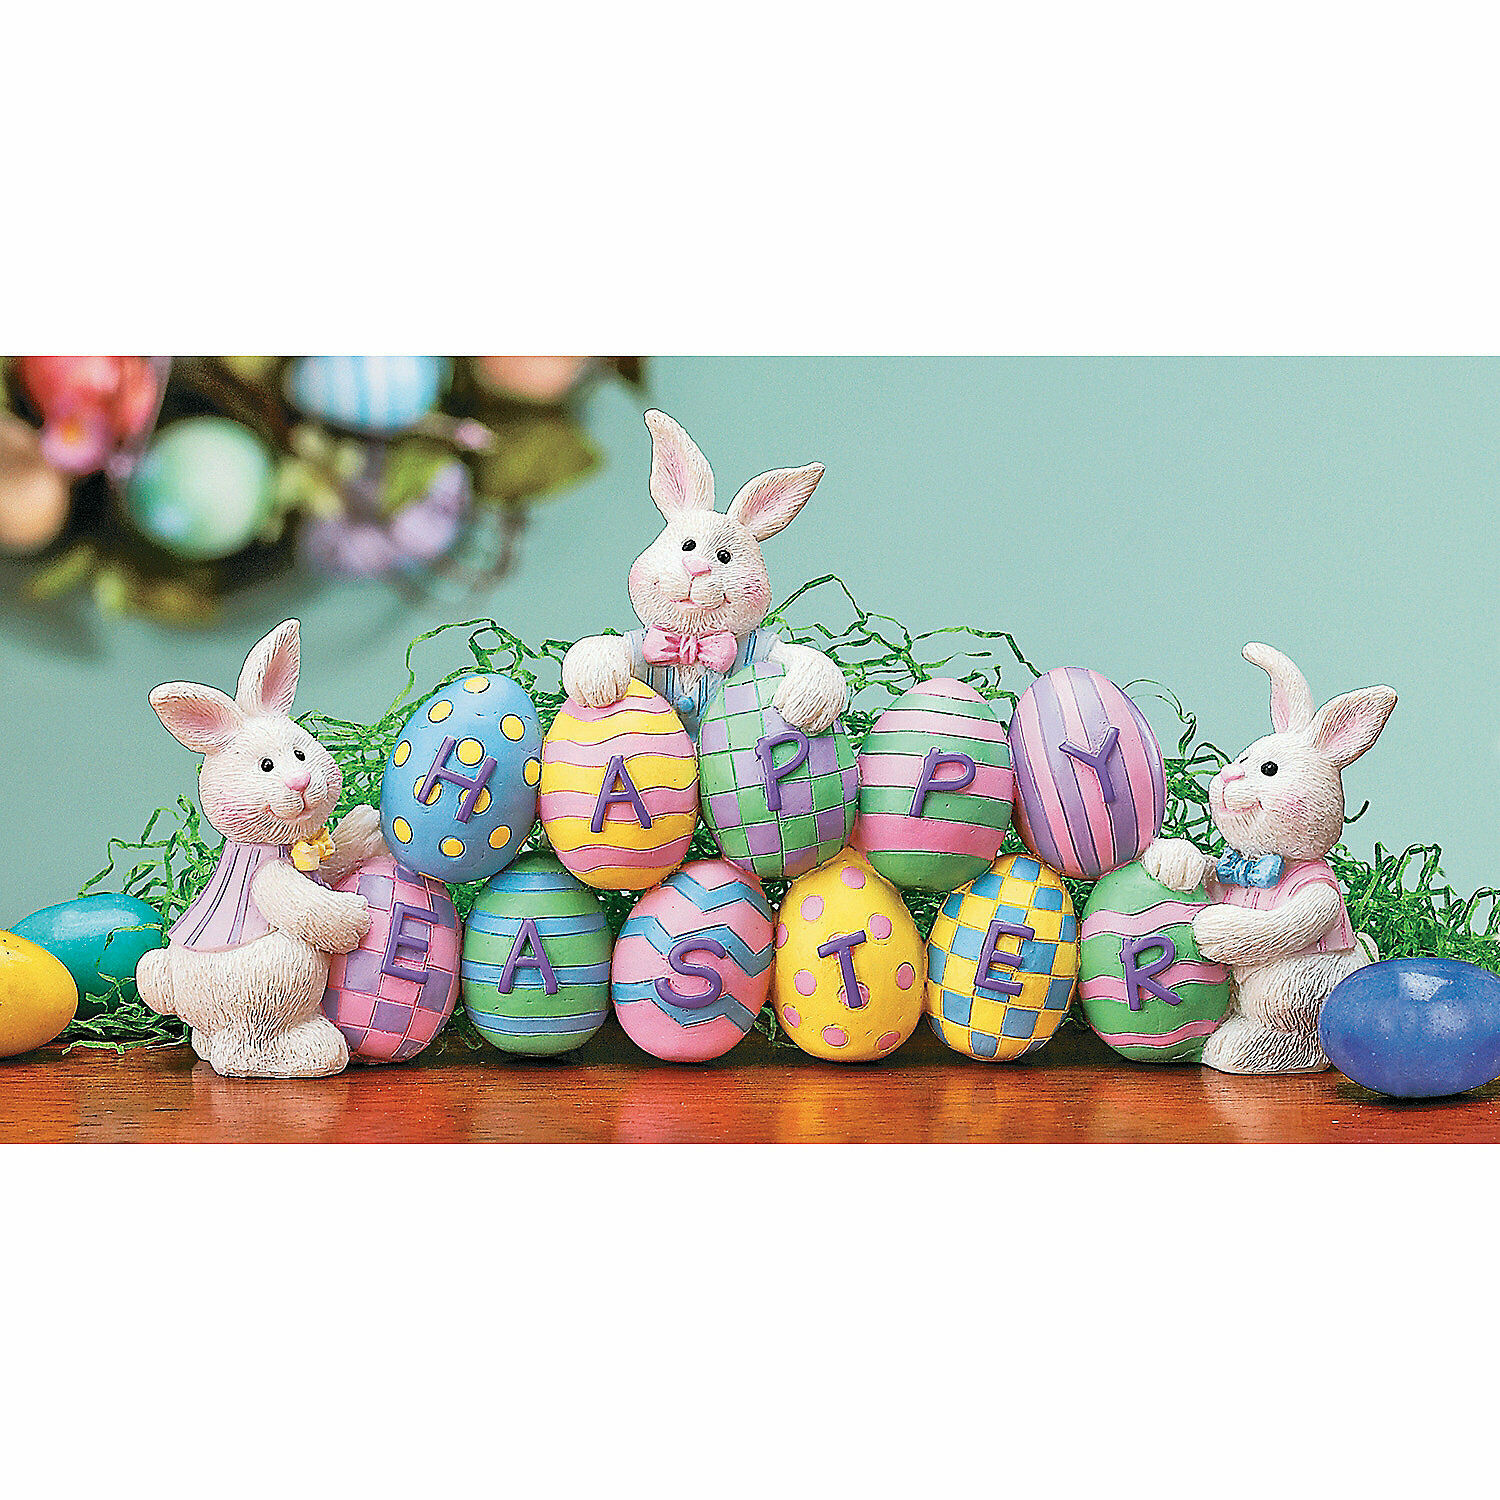 Eggs & Easter Bunnies Tabletop Decoration, Home Decor, 1 Piece